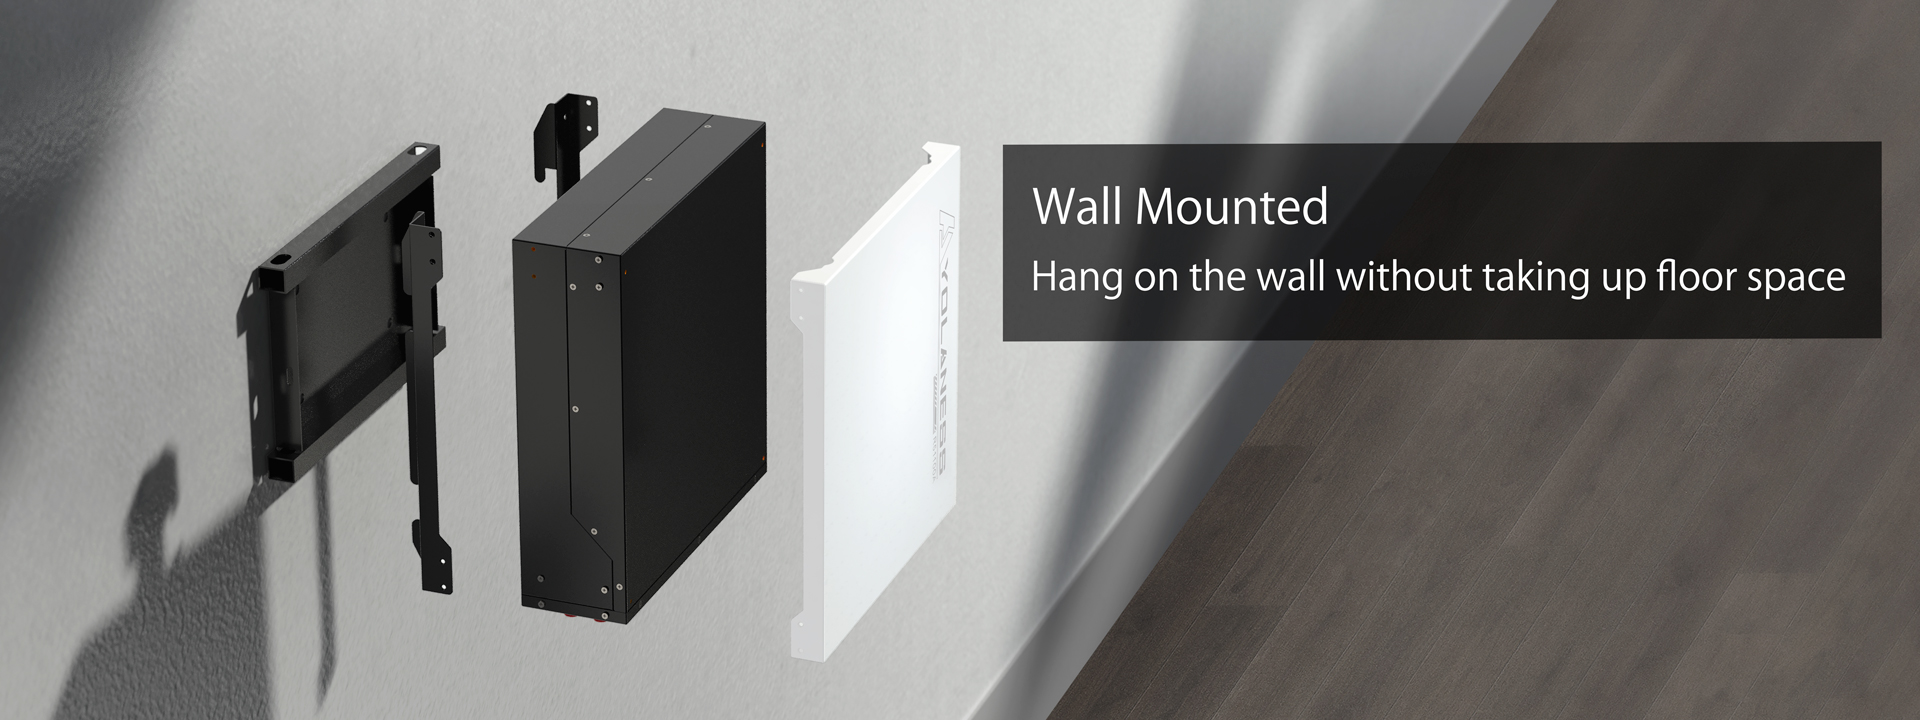 wall-mounted.jpg